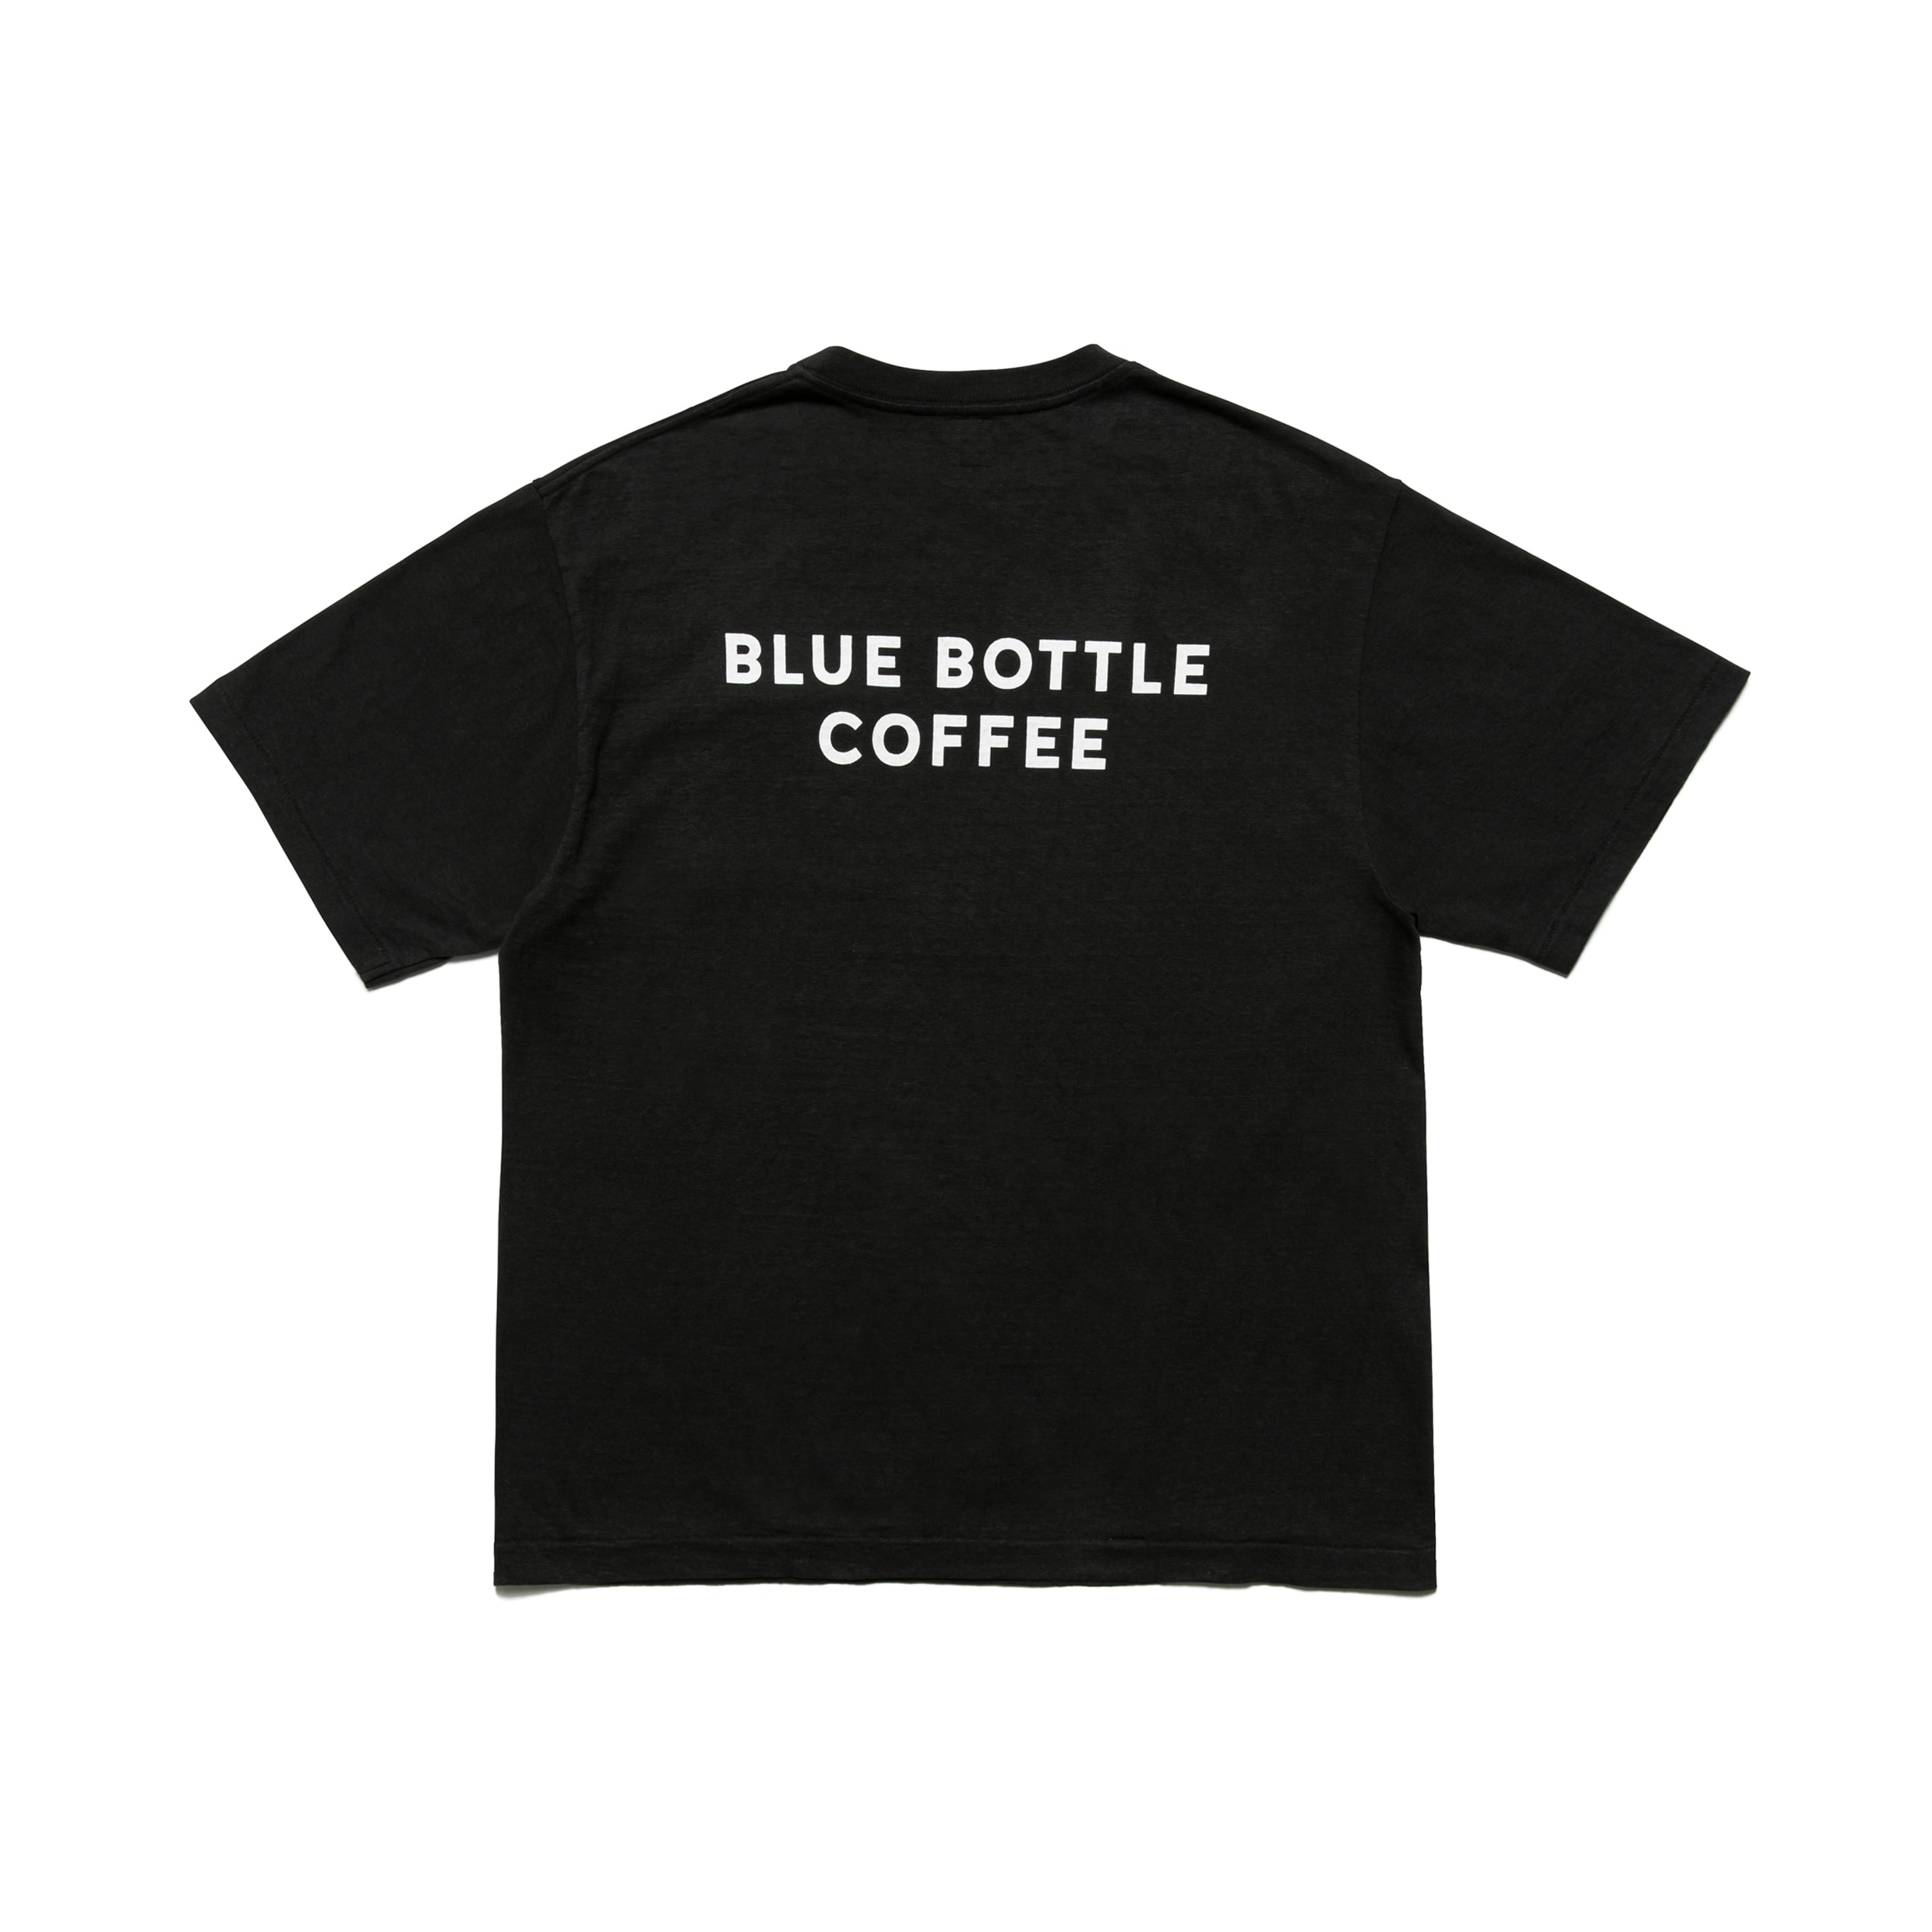 HUMAN MADE x Blue Bottle Coffee 联名限定系列正式发布